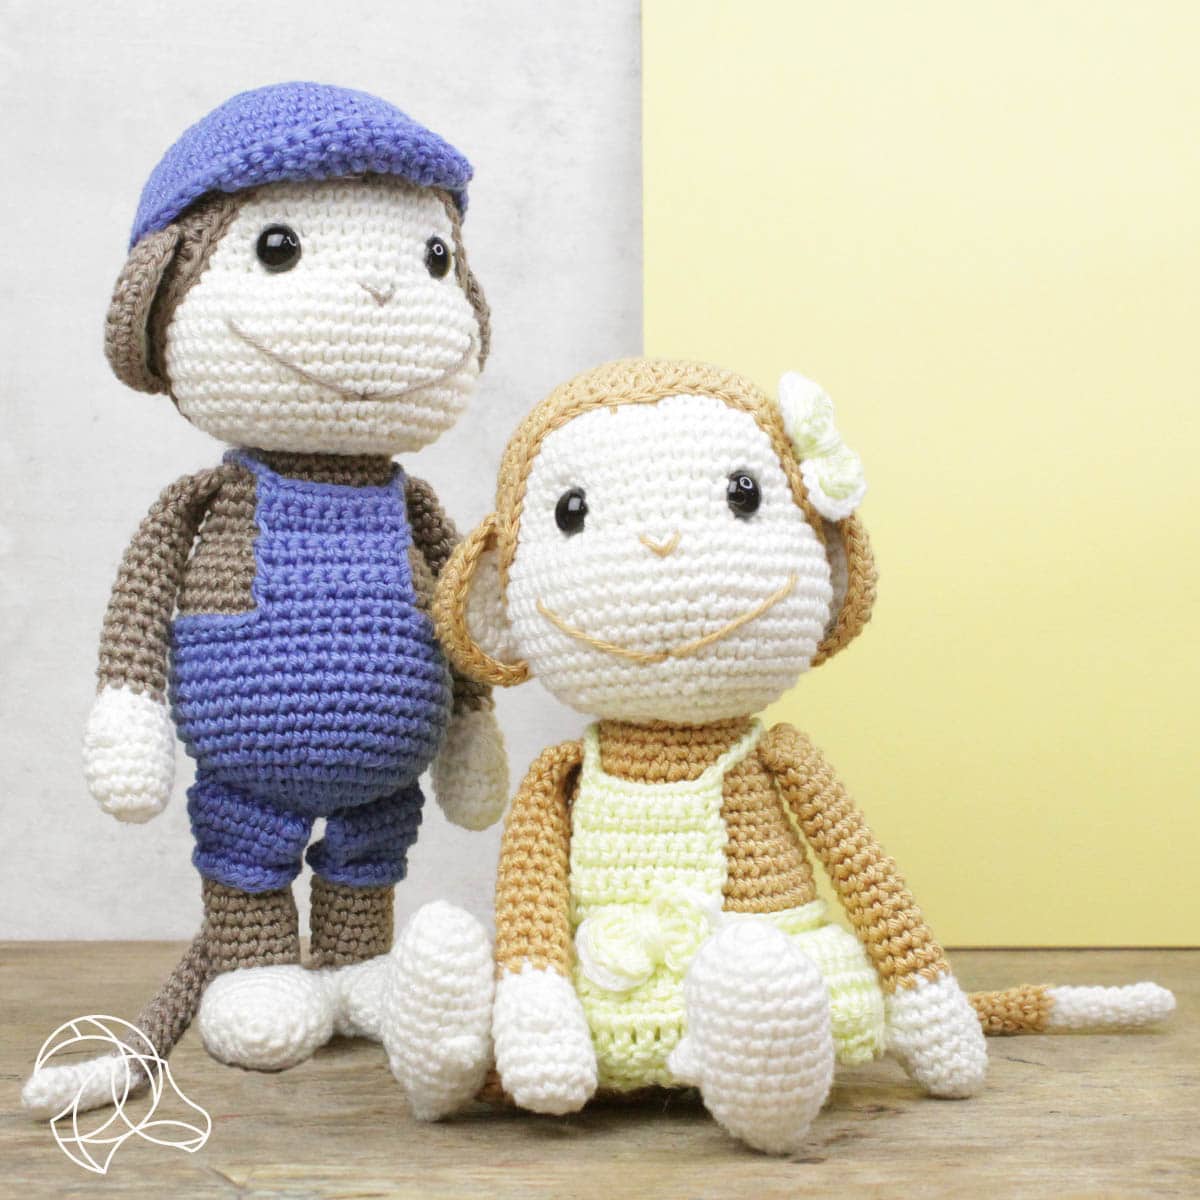 Bryan the Monkey Crochet Kit - by Hardicraft